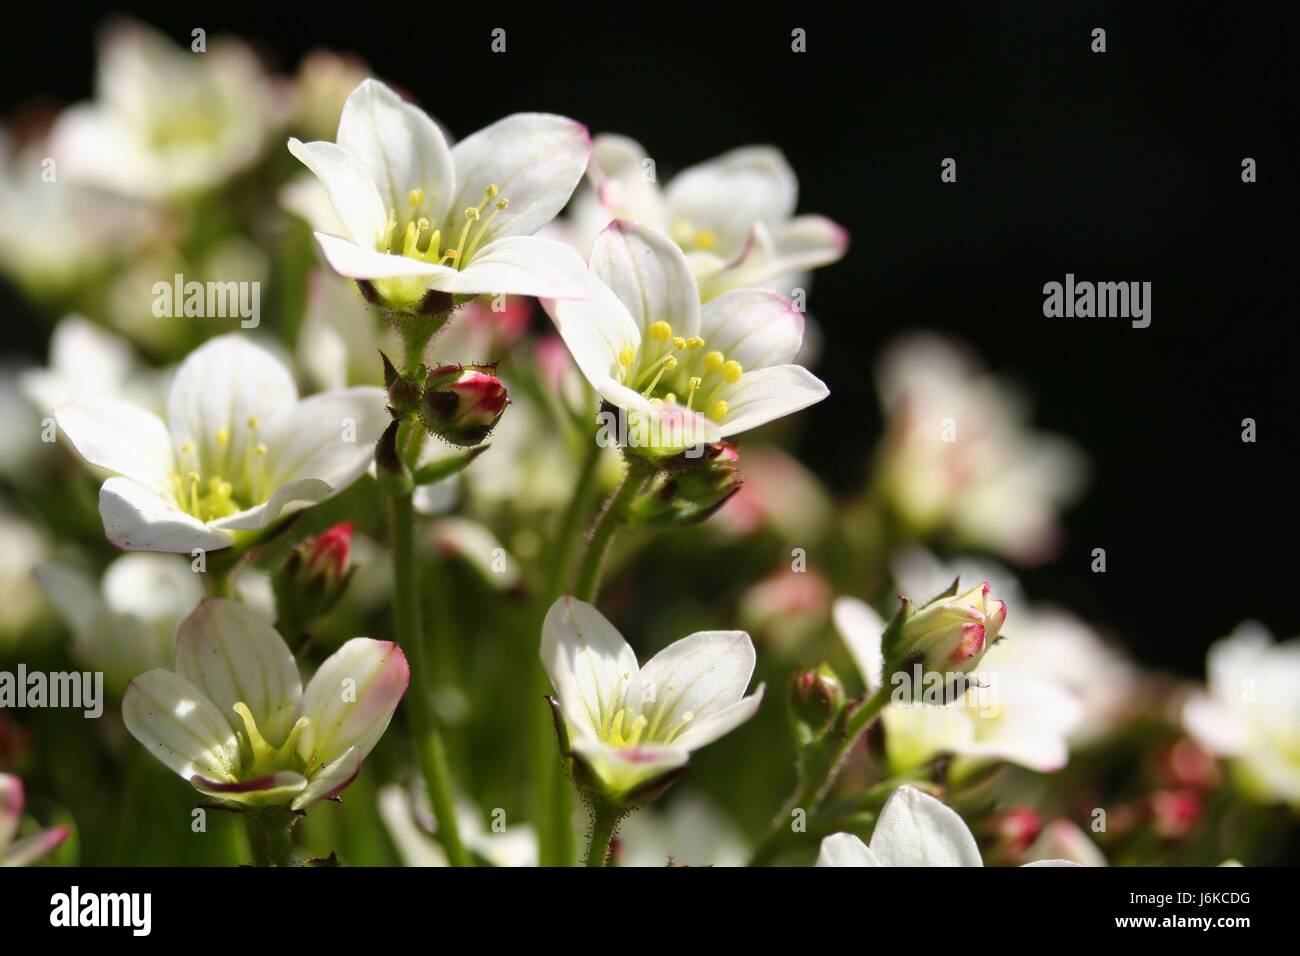 bloom blossom flourish flourishing rockery pale bright pure white snow white Stock Photo